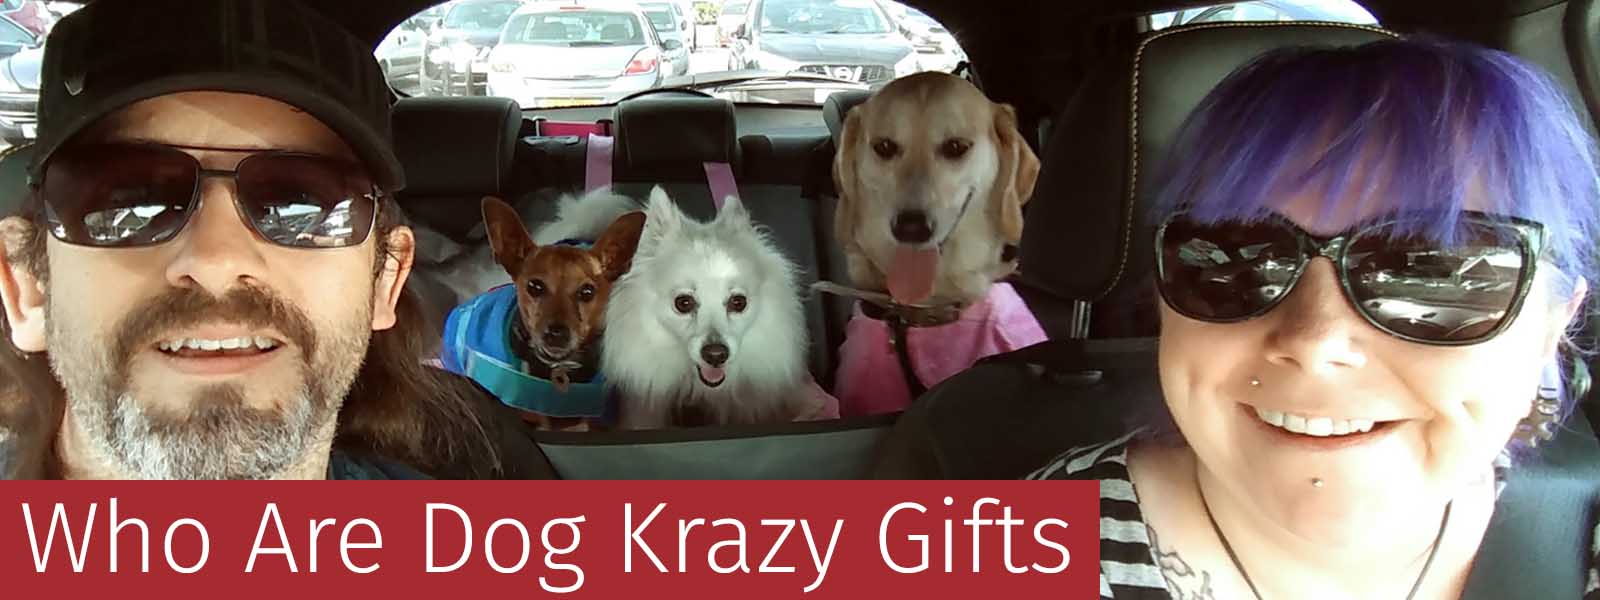 Dog Krazy Gifts - Meet The Team